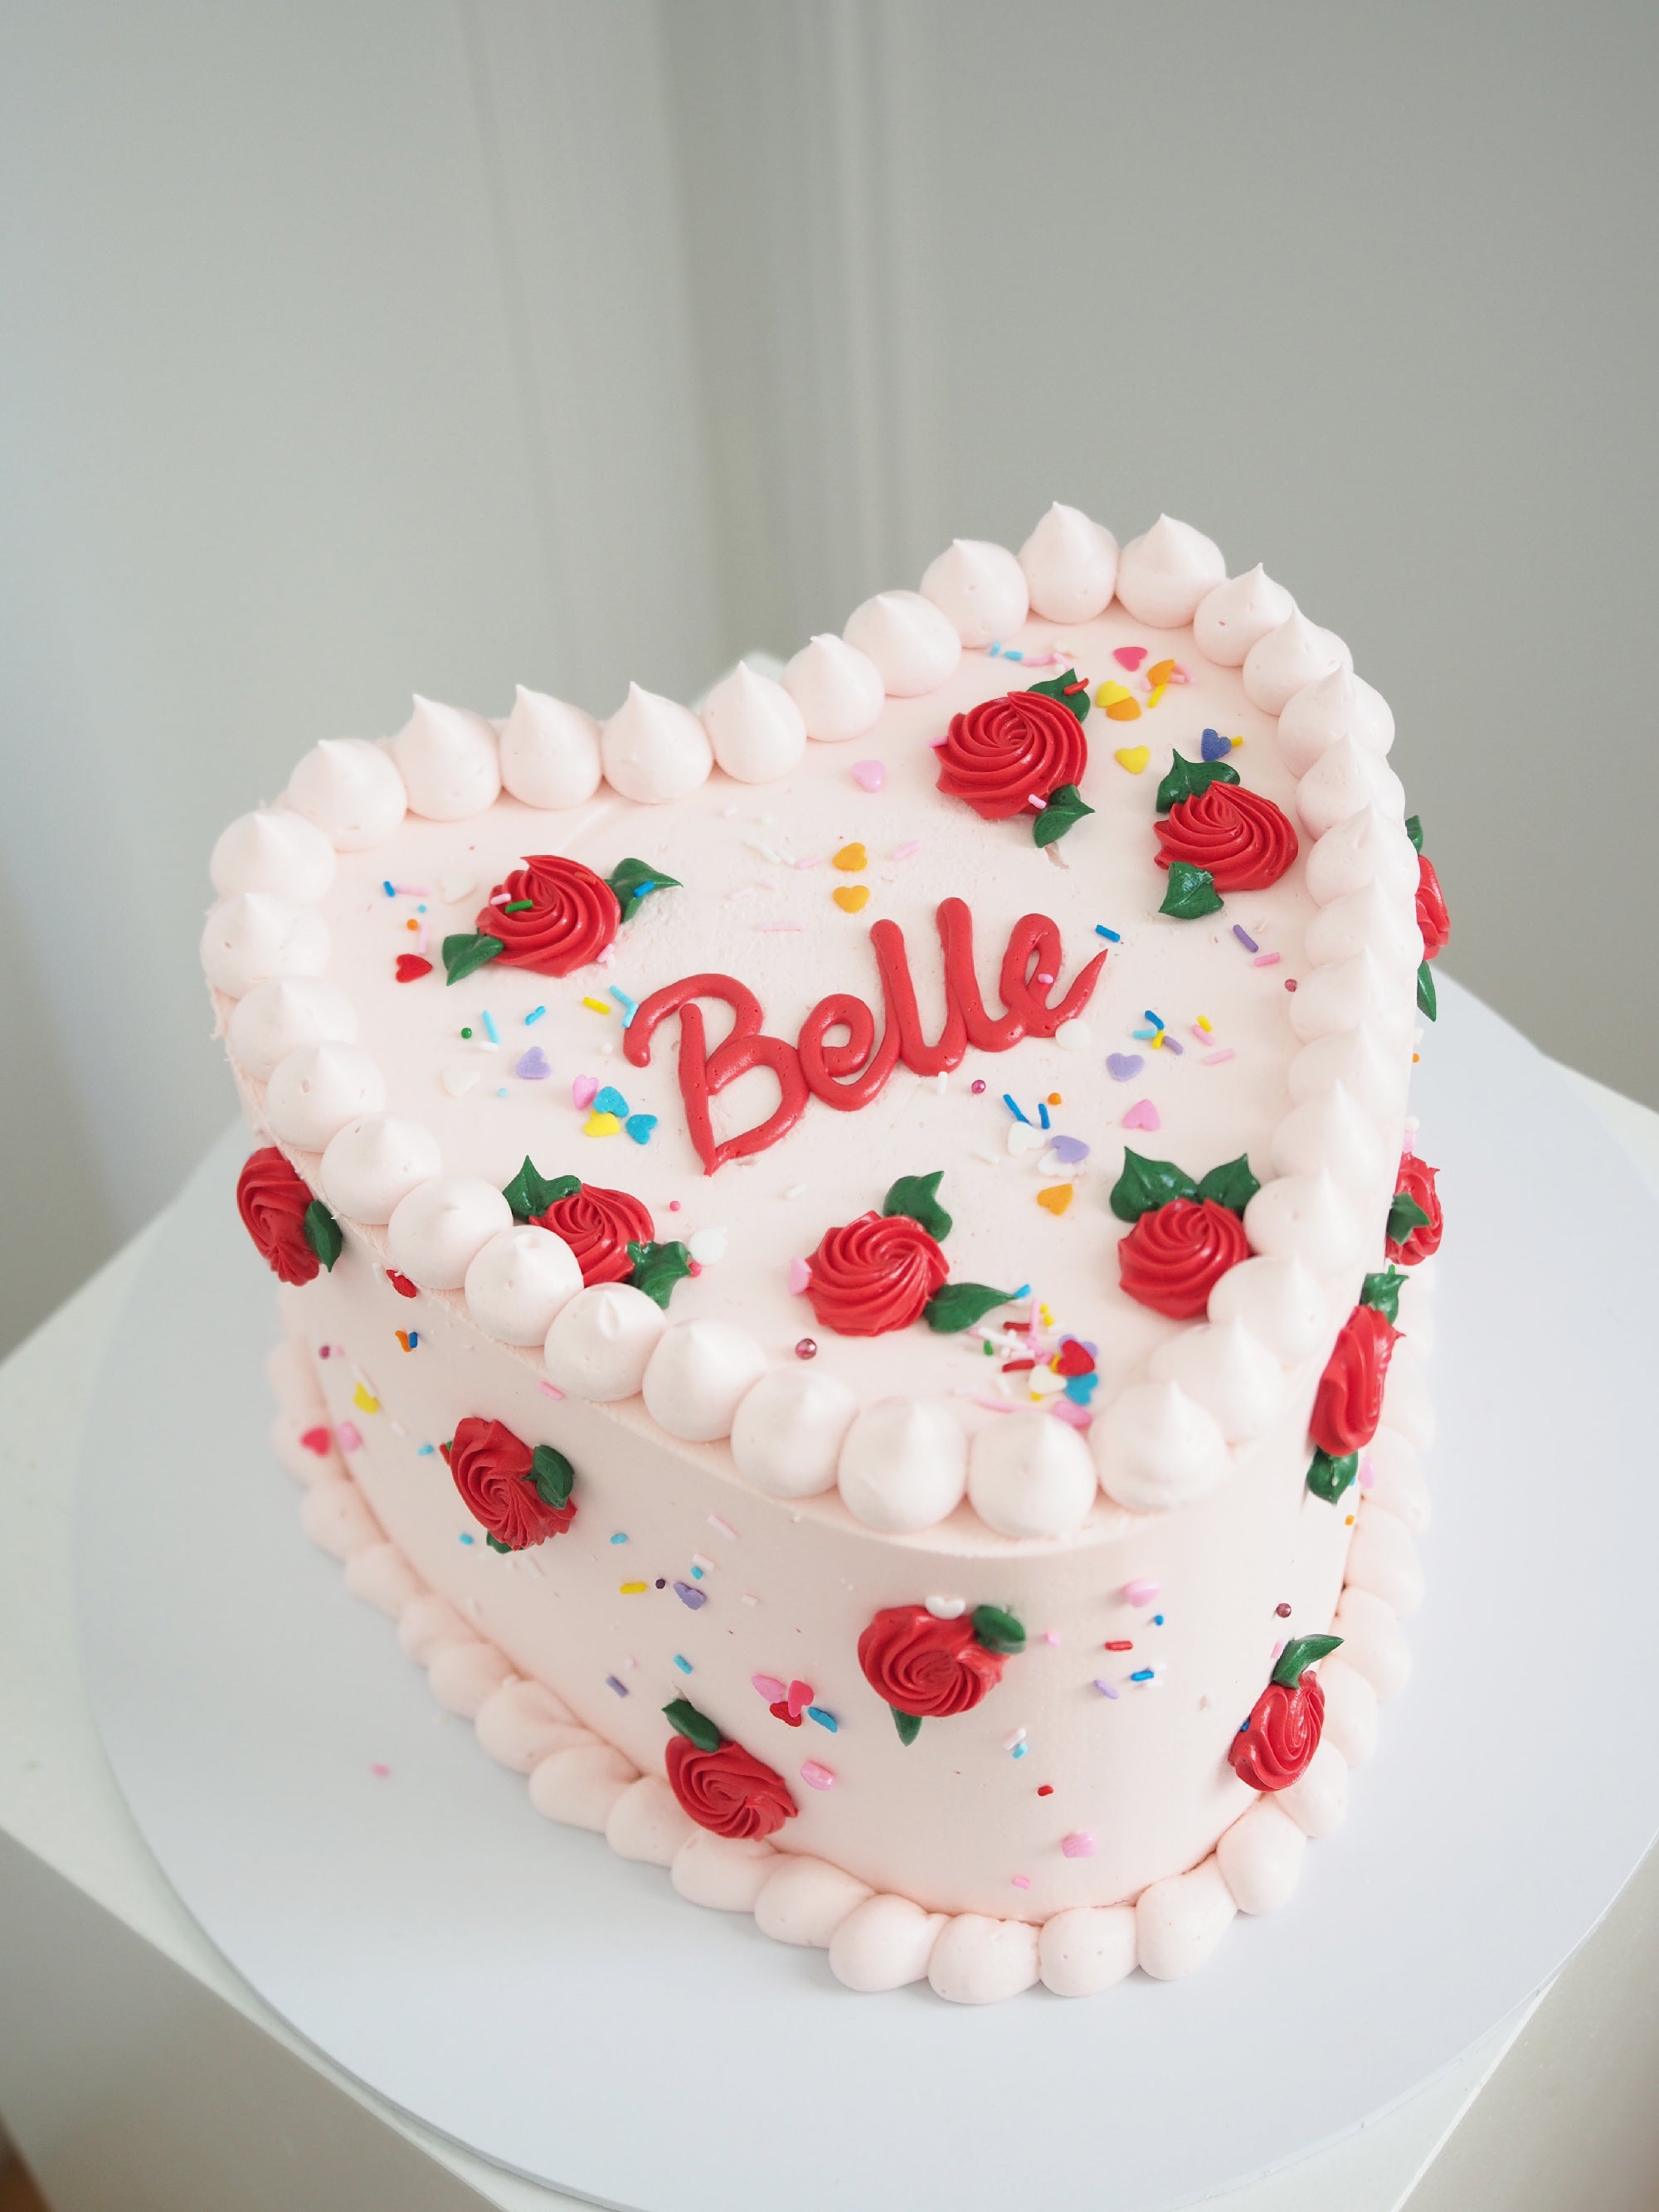 Heart cake with Vanilla Sponge with Piping | Lily Vanilli Bakery London